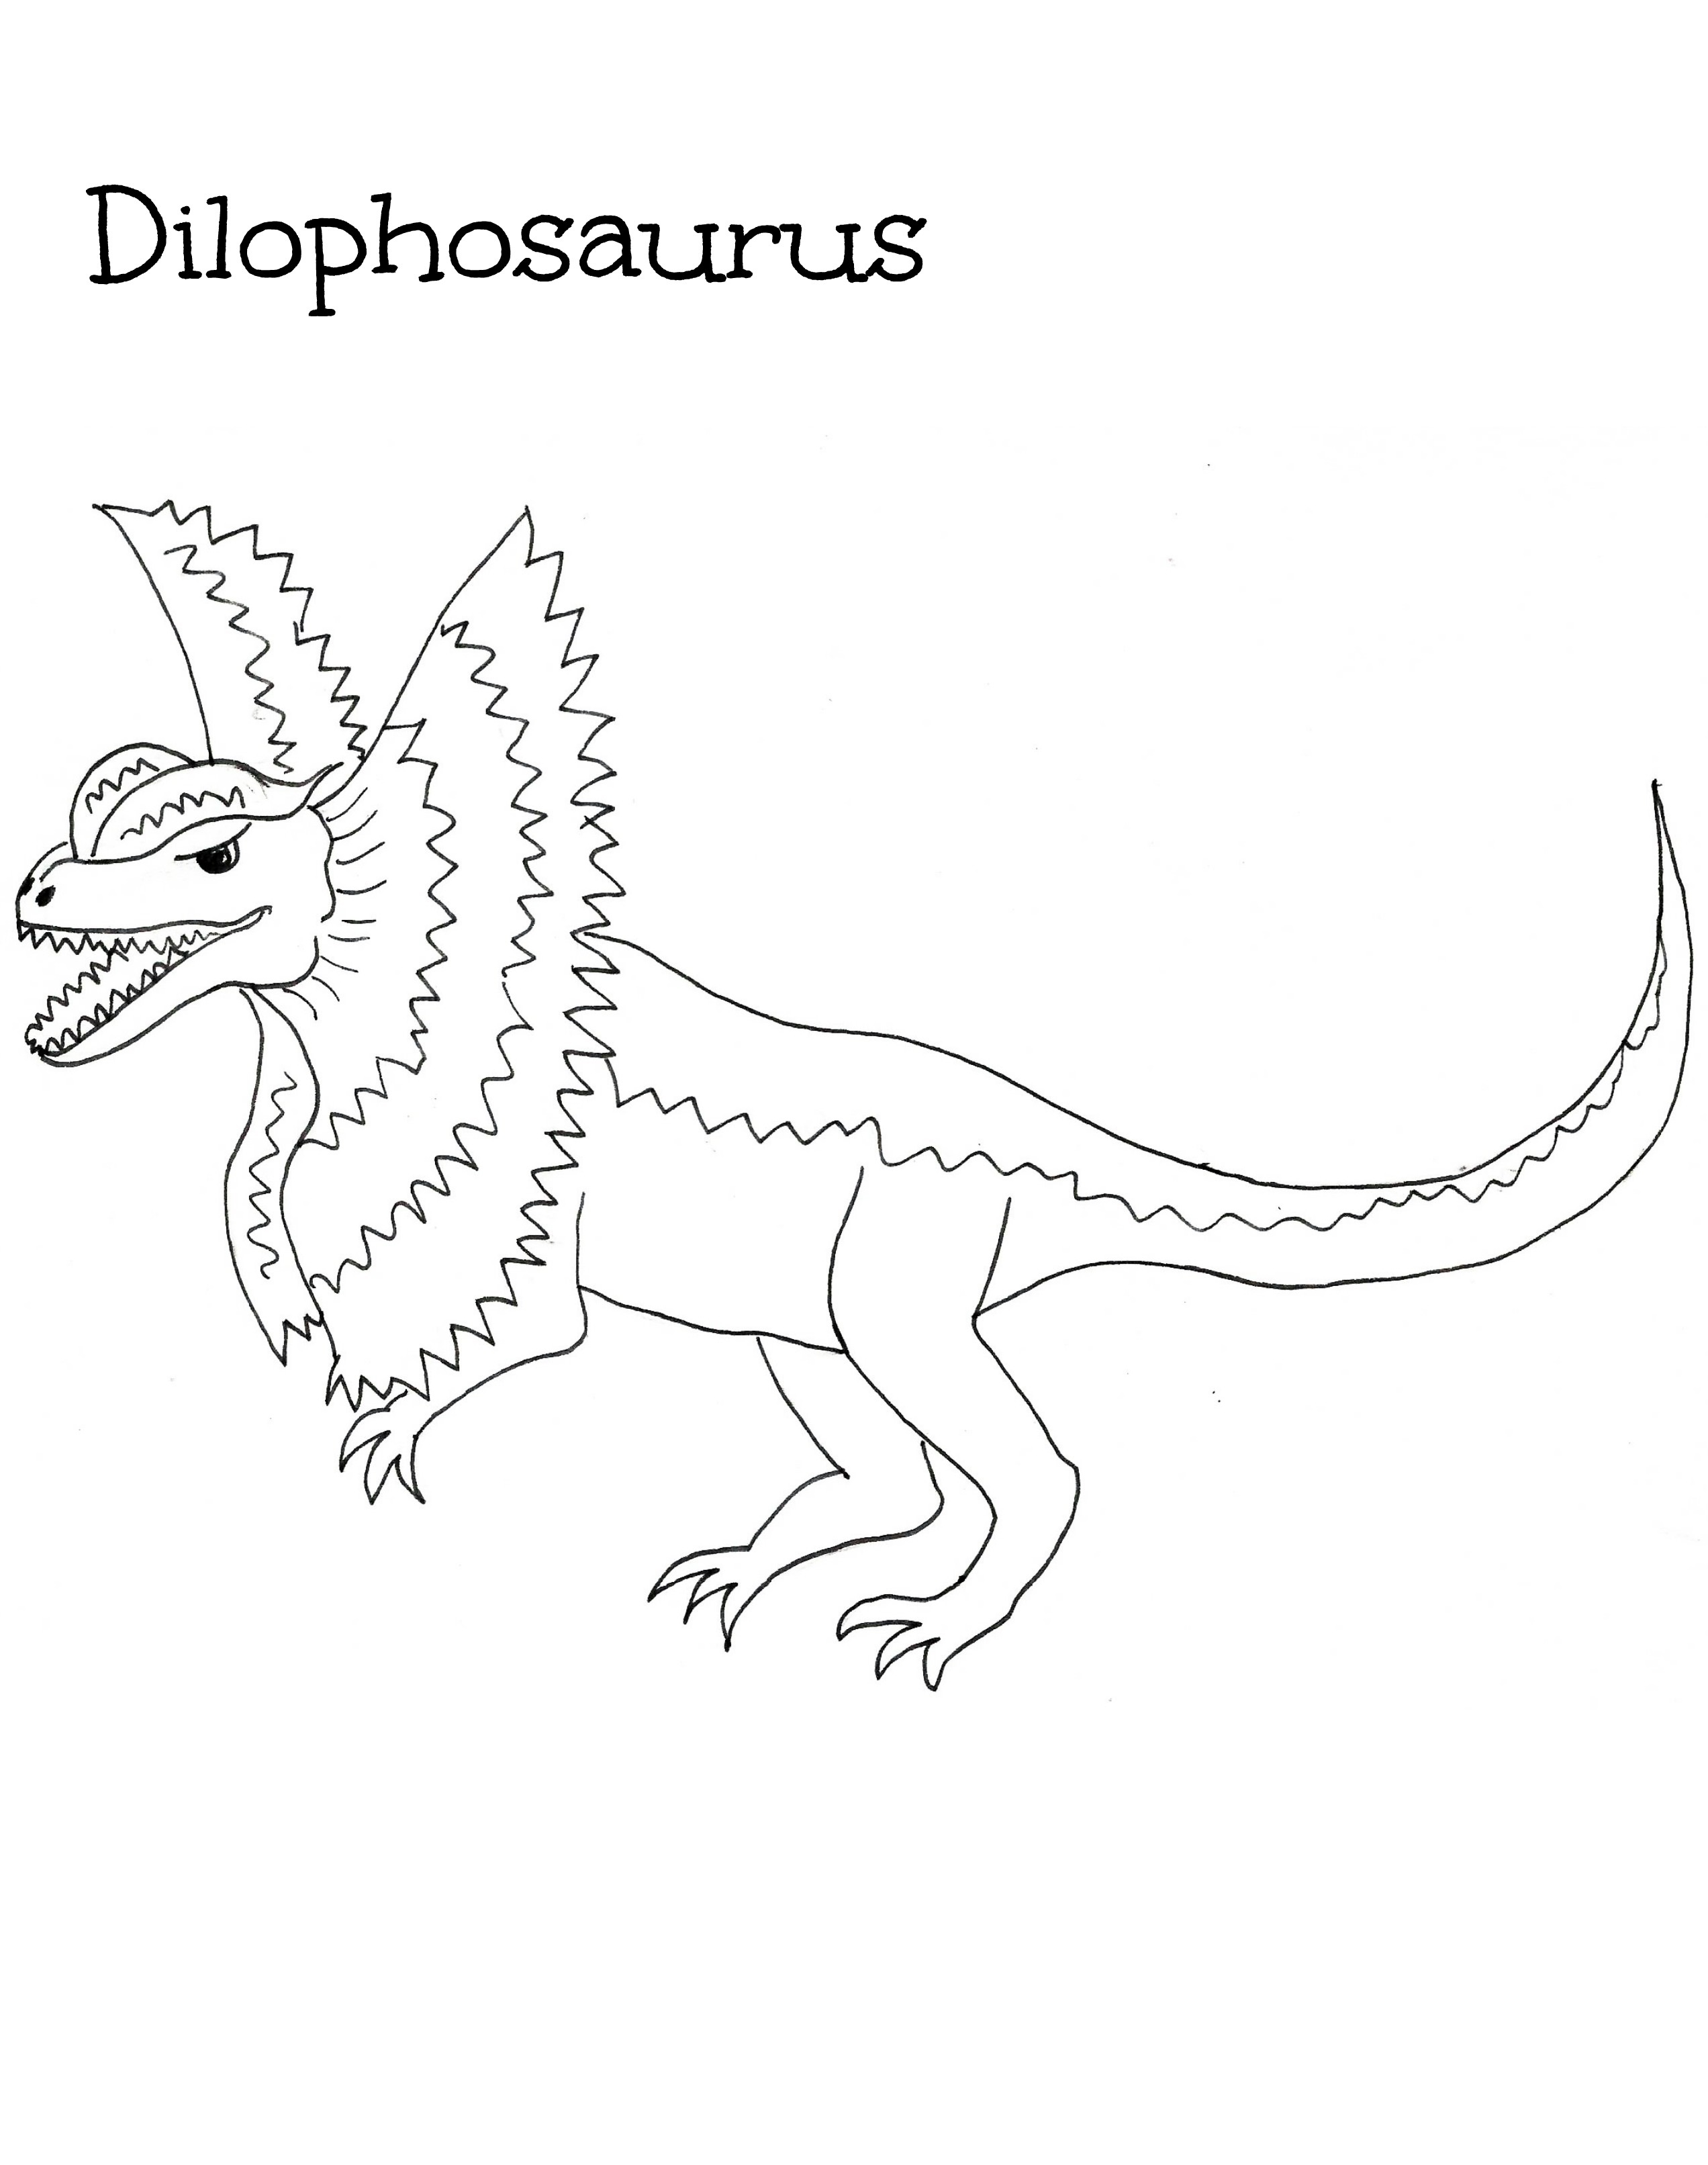 dilophosaurus coloring pages